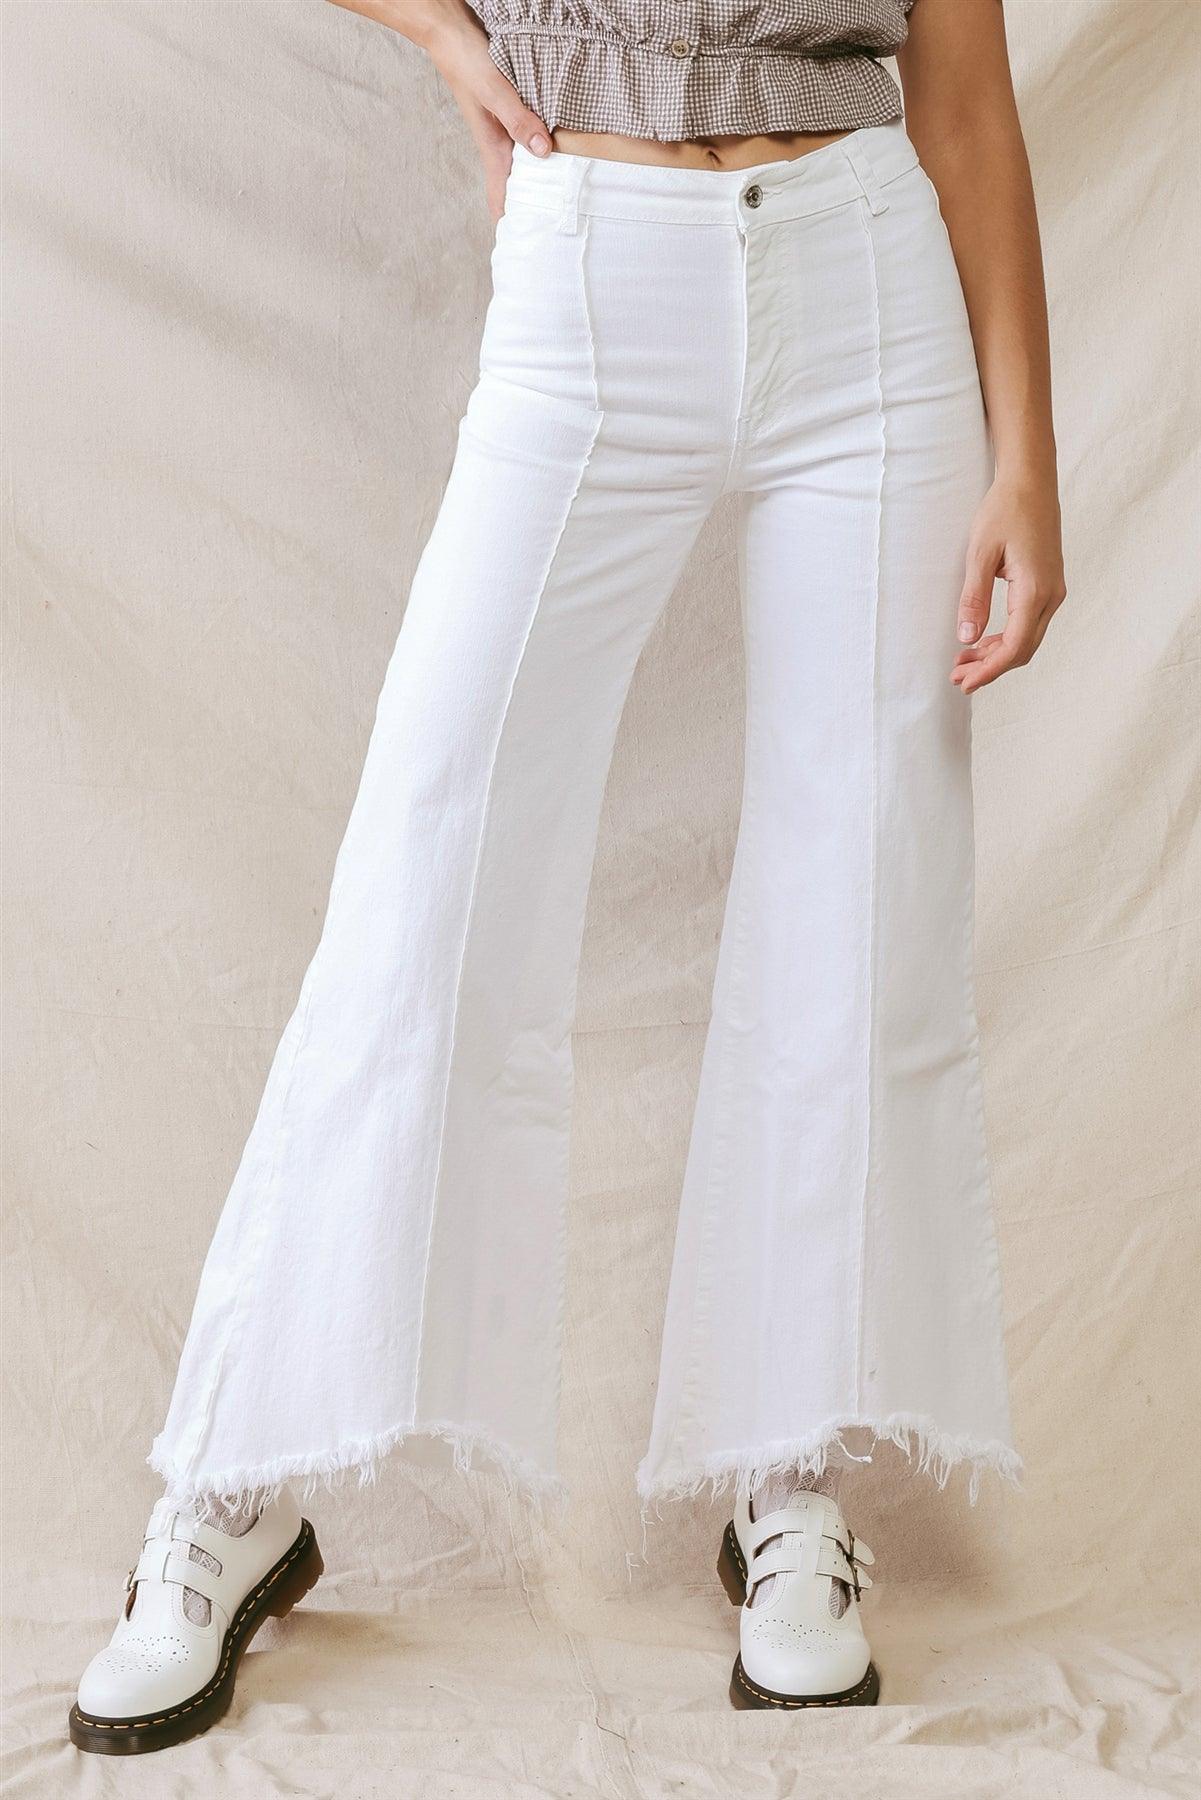 White Denim High Waist Cotton Material Wide Leg Raw Hem Pants /2-4-3-2-2-1